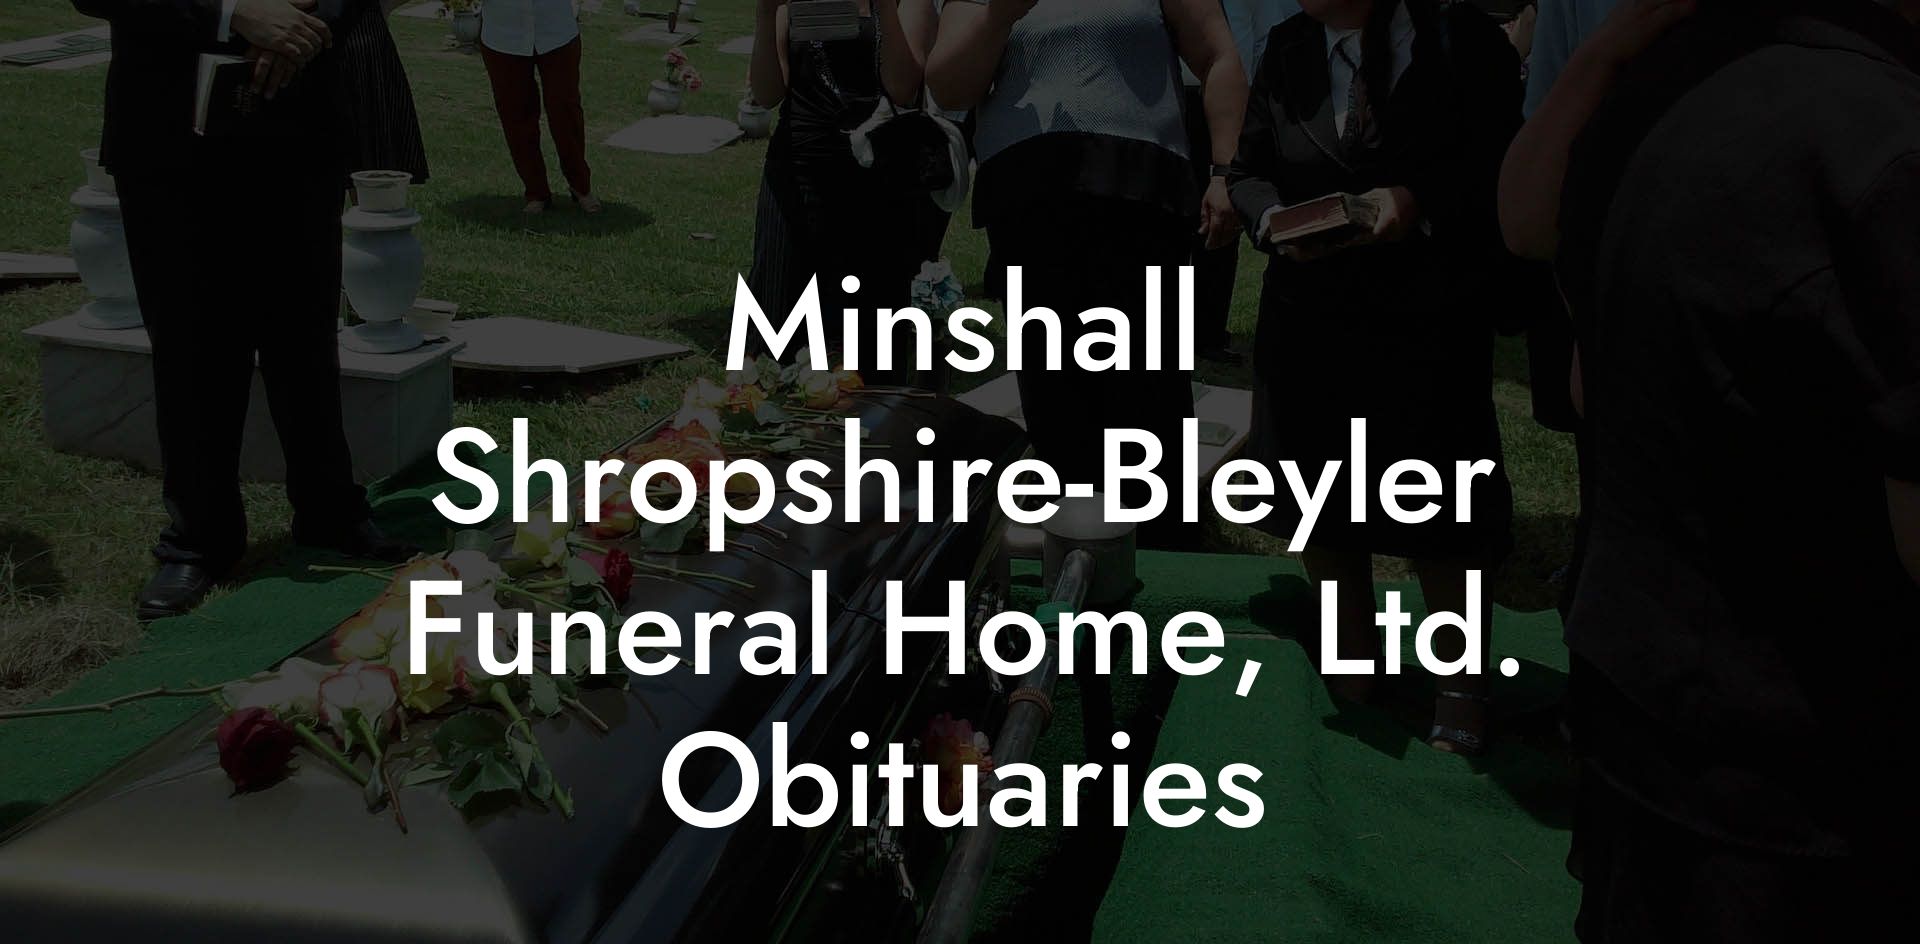 Minshall Shropshire-Bleyler Funeral Home, Ltd. Obituaries